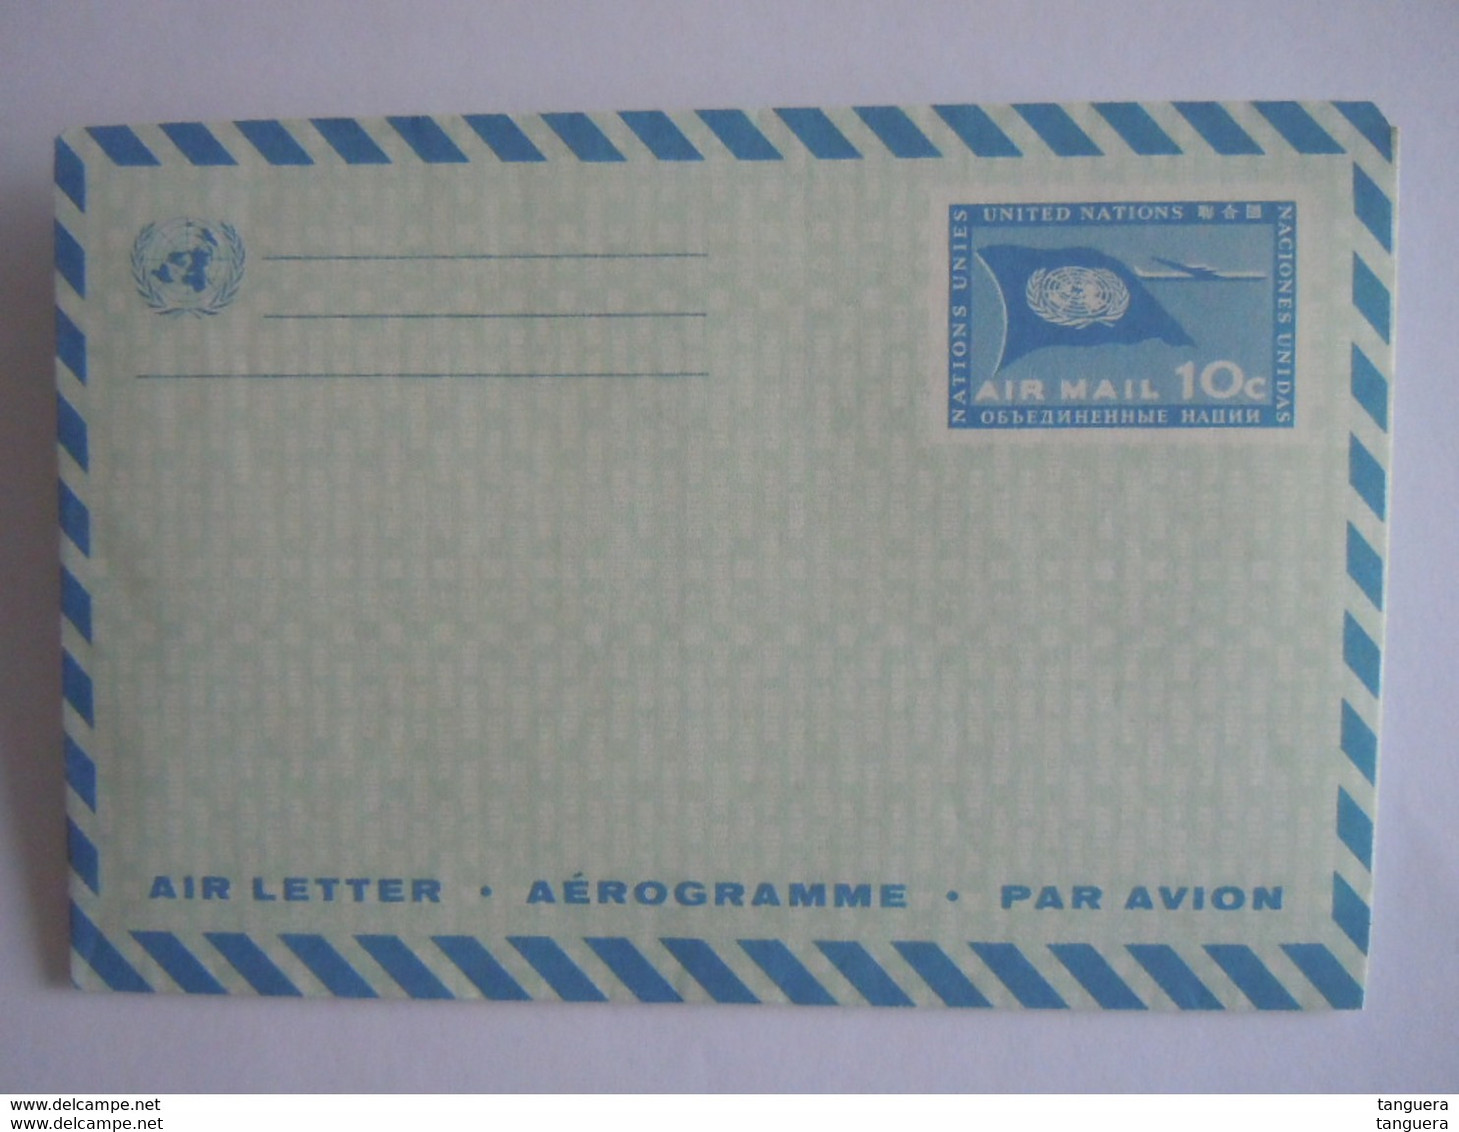 UN UNO United Nations New York Aerogramme Stationery Entier Postal Air Letter Flag 10c Mint - Poste Aérienne